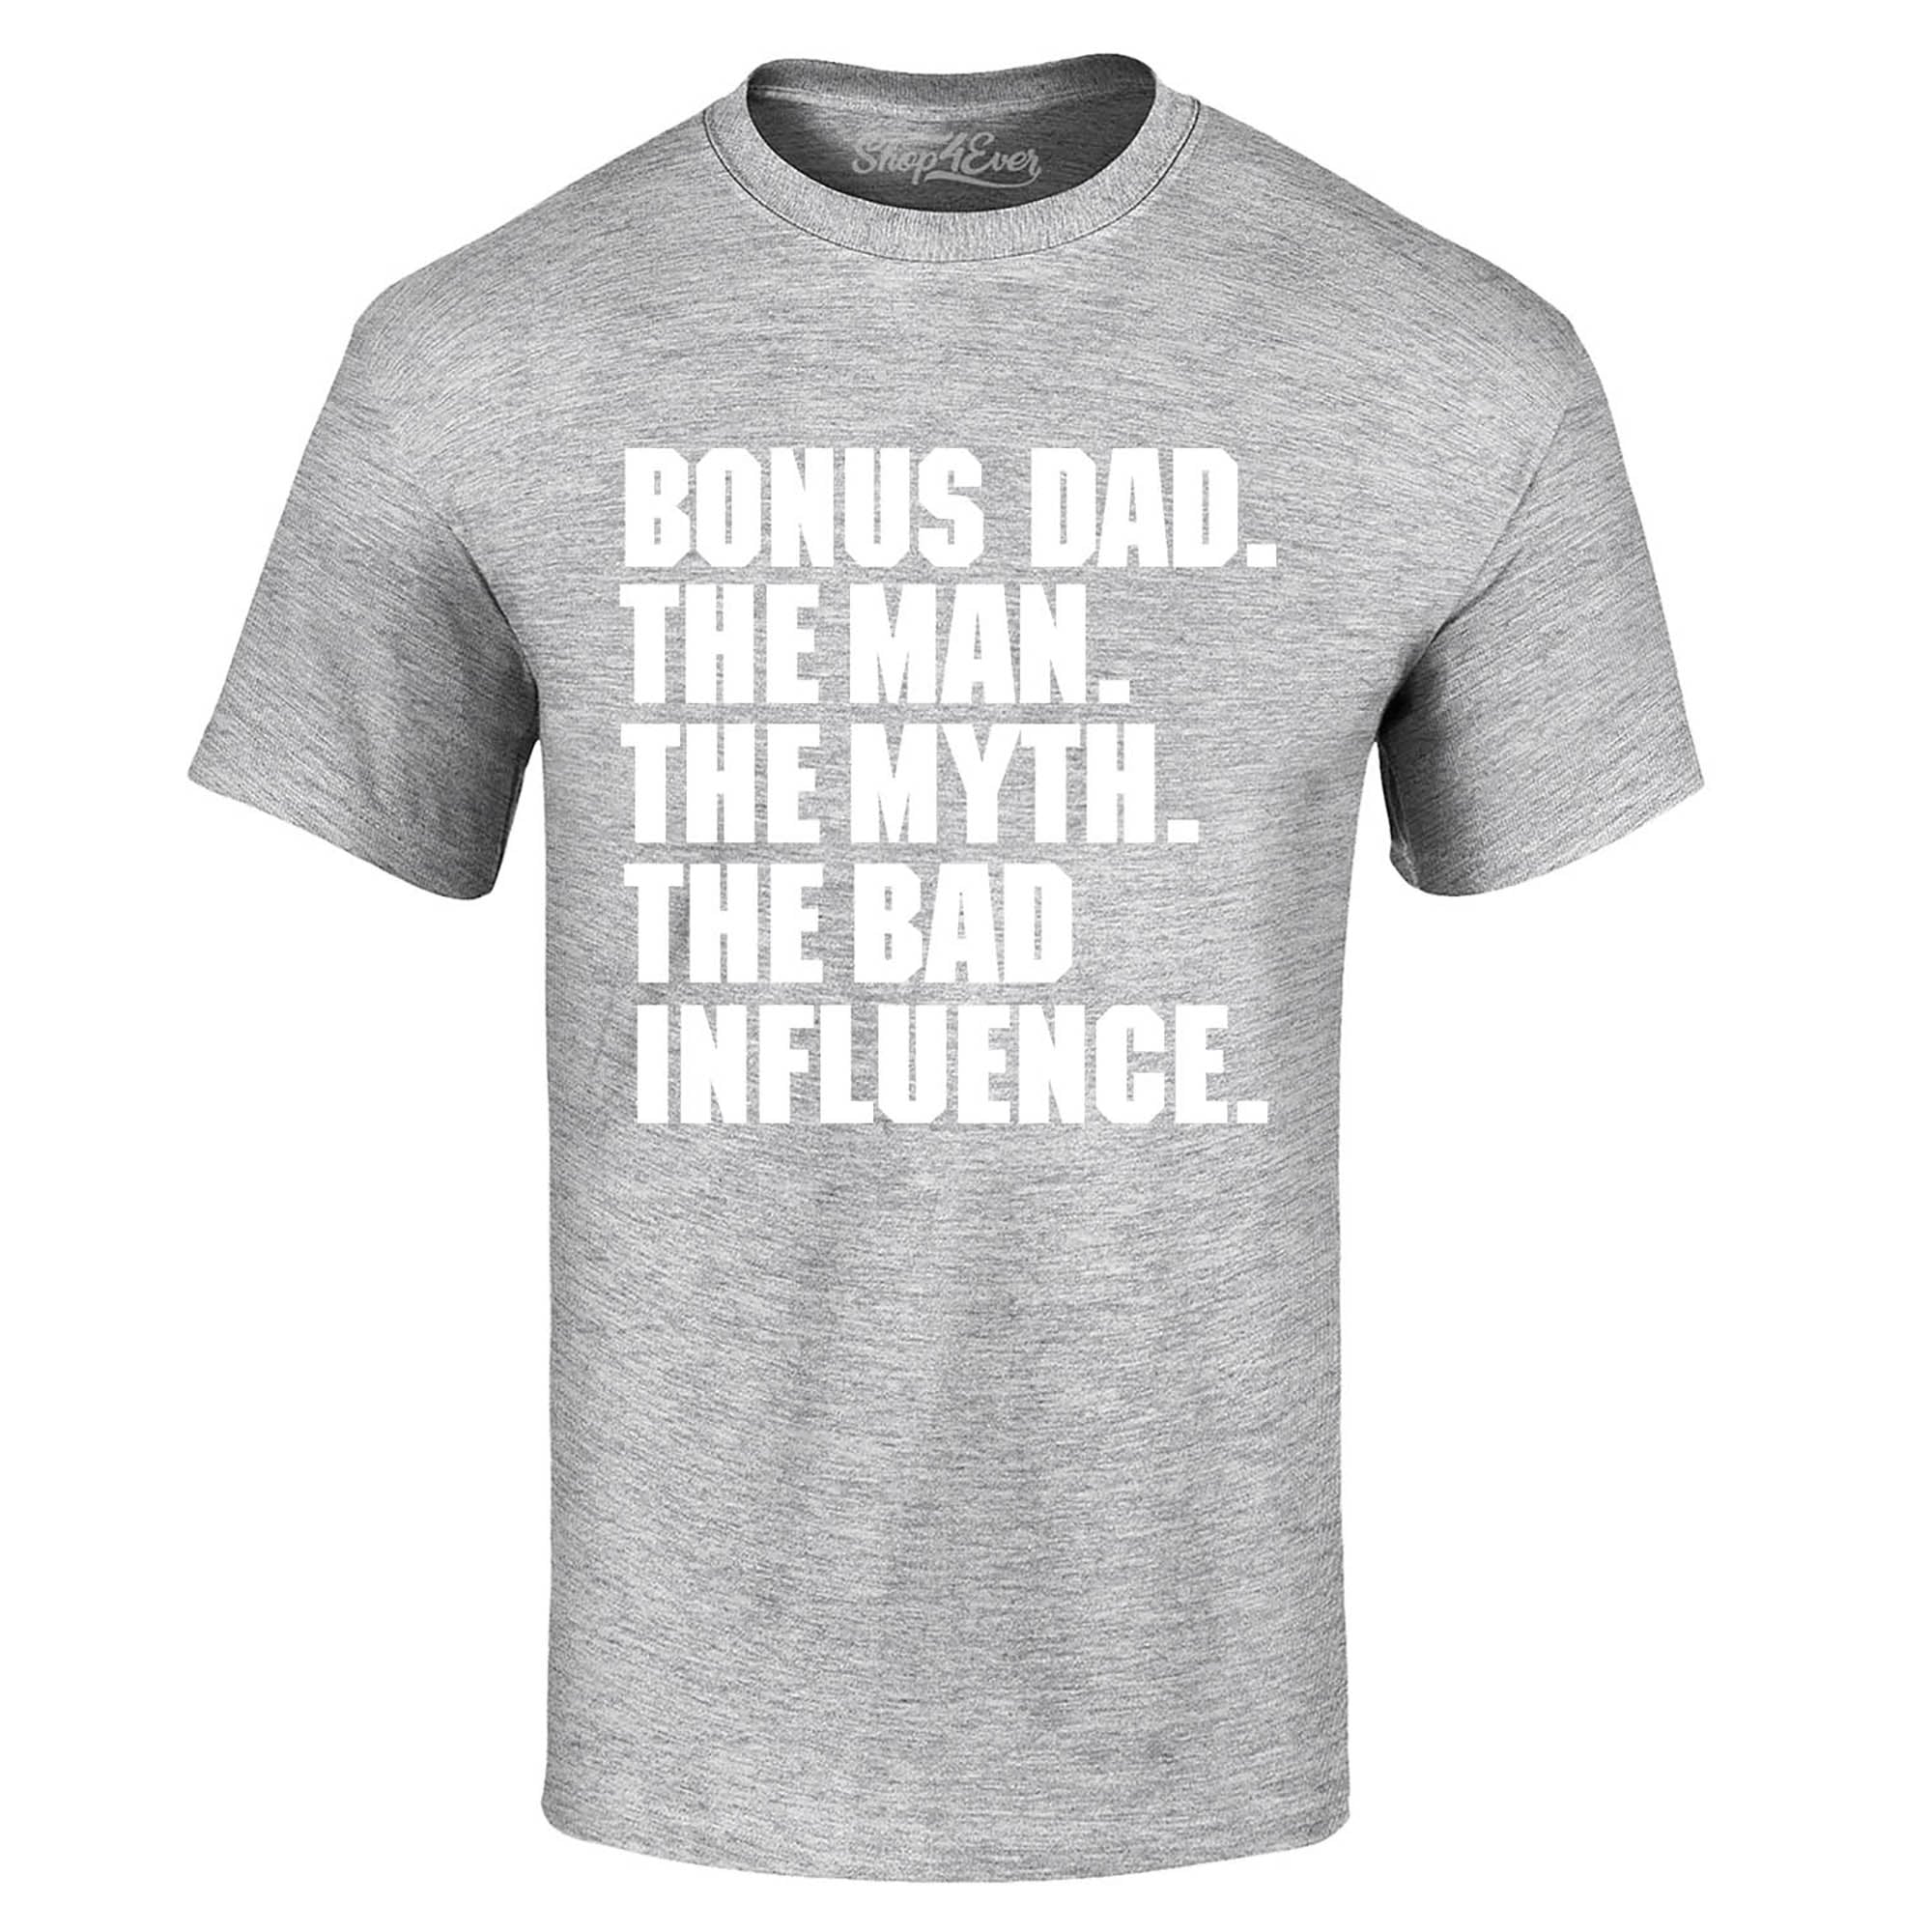 Bonus Dad The Man The Myth The Bad Influence T-Shirt